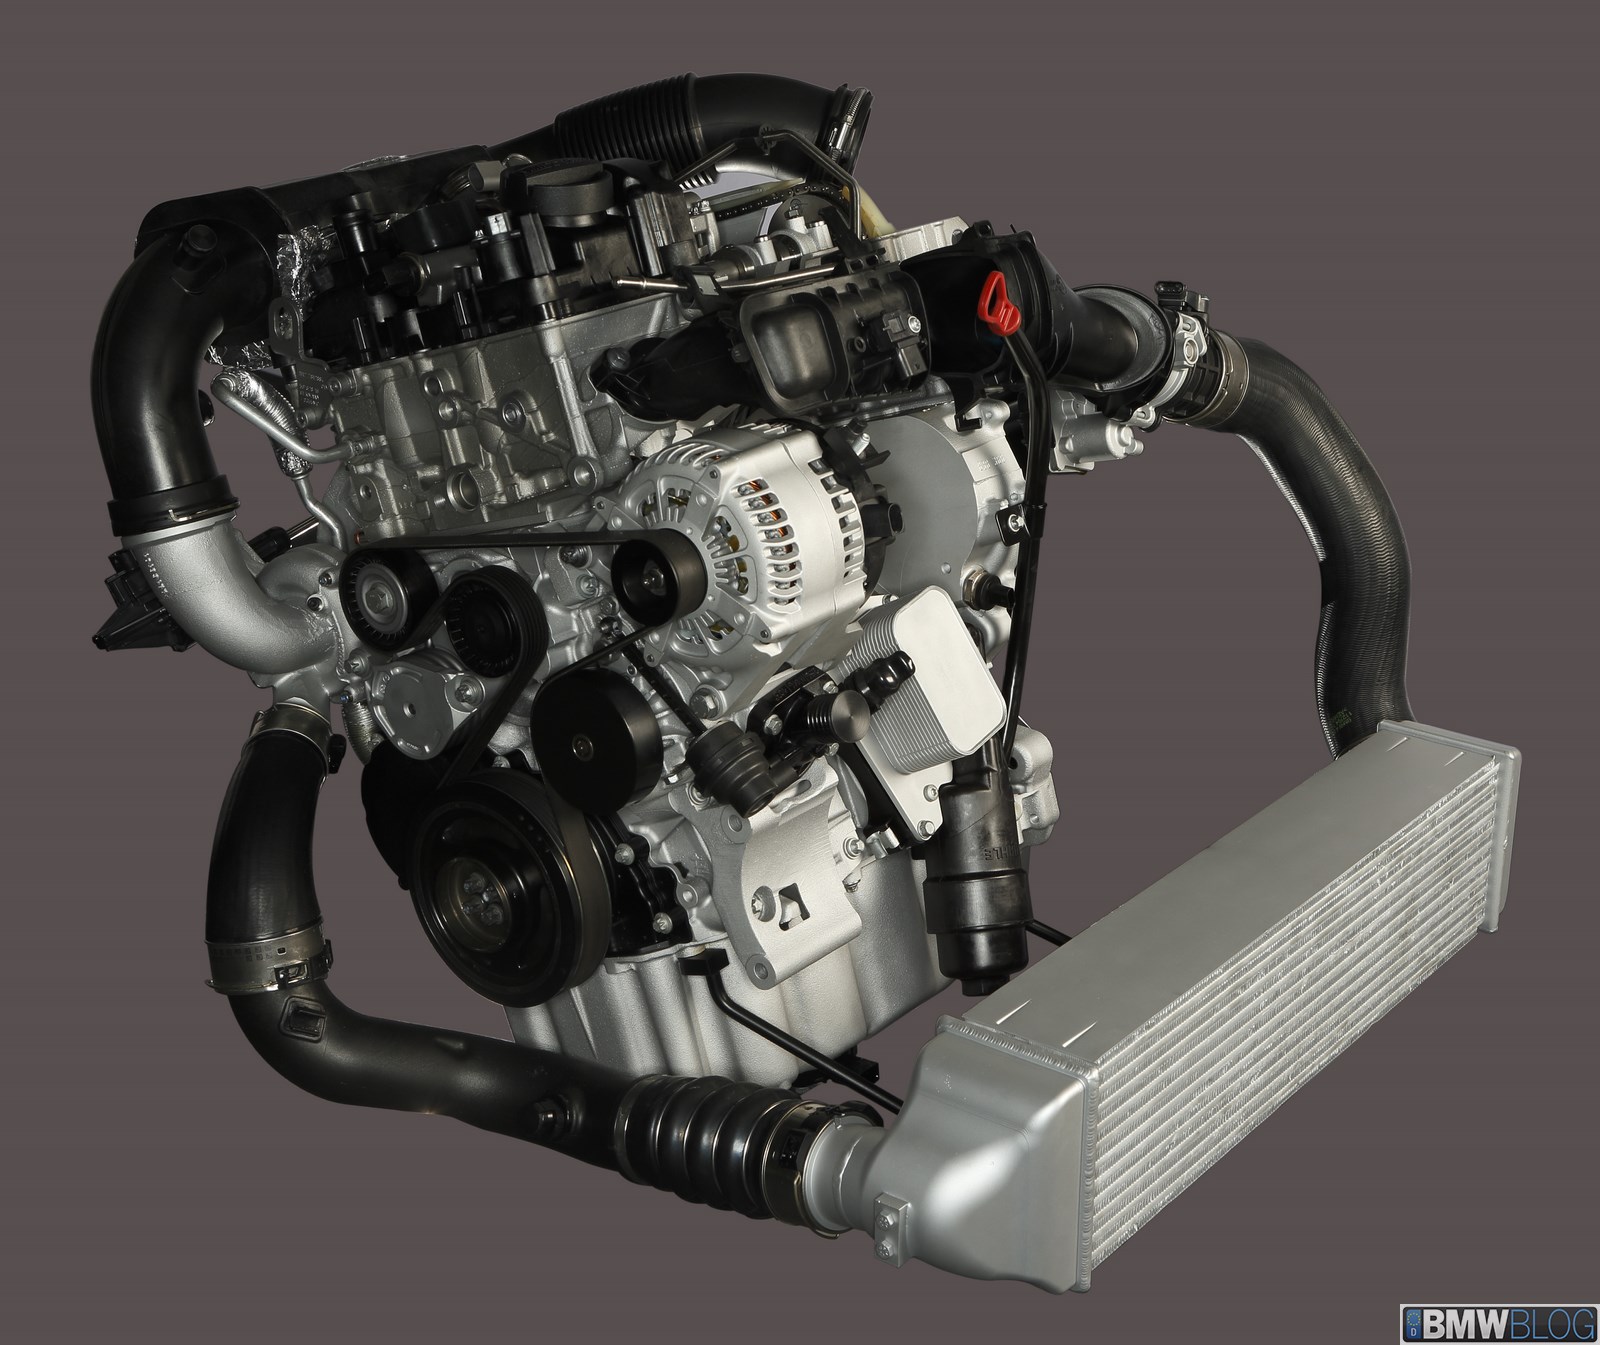 Bmw 528i 4 cylinder turbo review #3